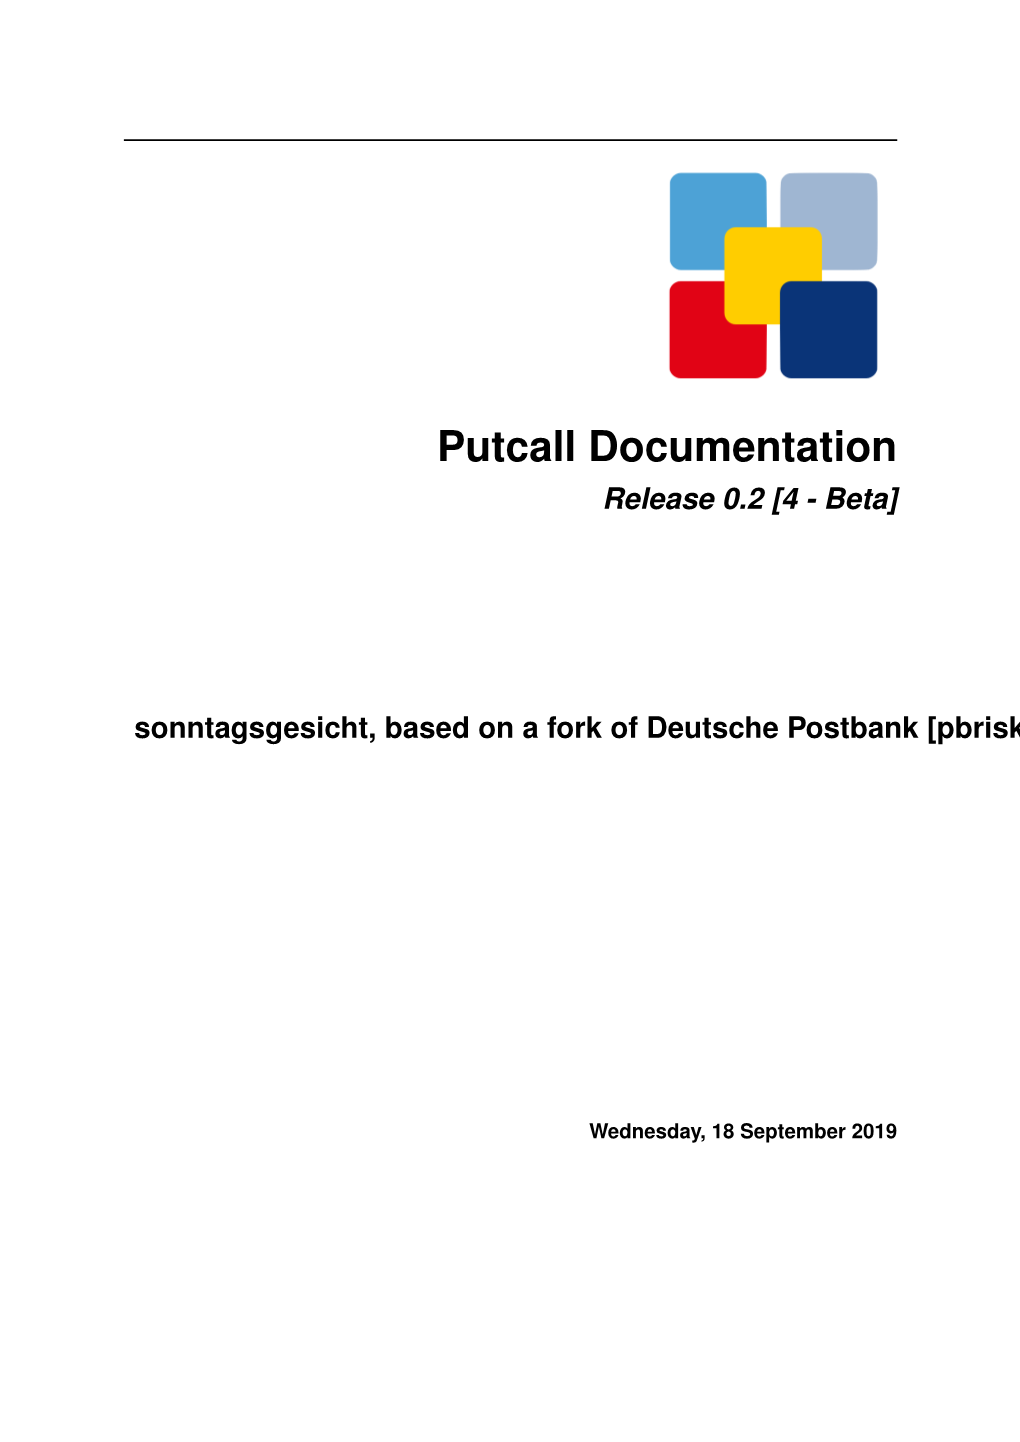 Putcall Documentation Release 0.2 [4 - Beta]